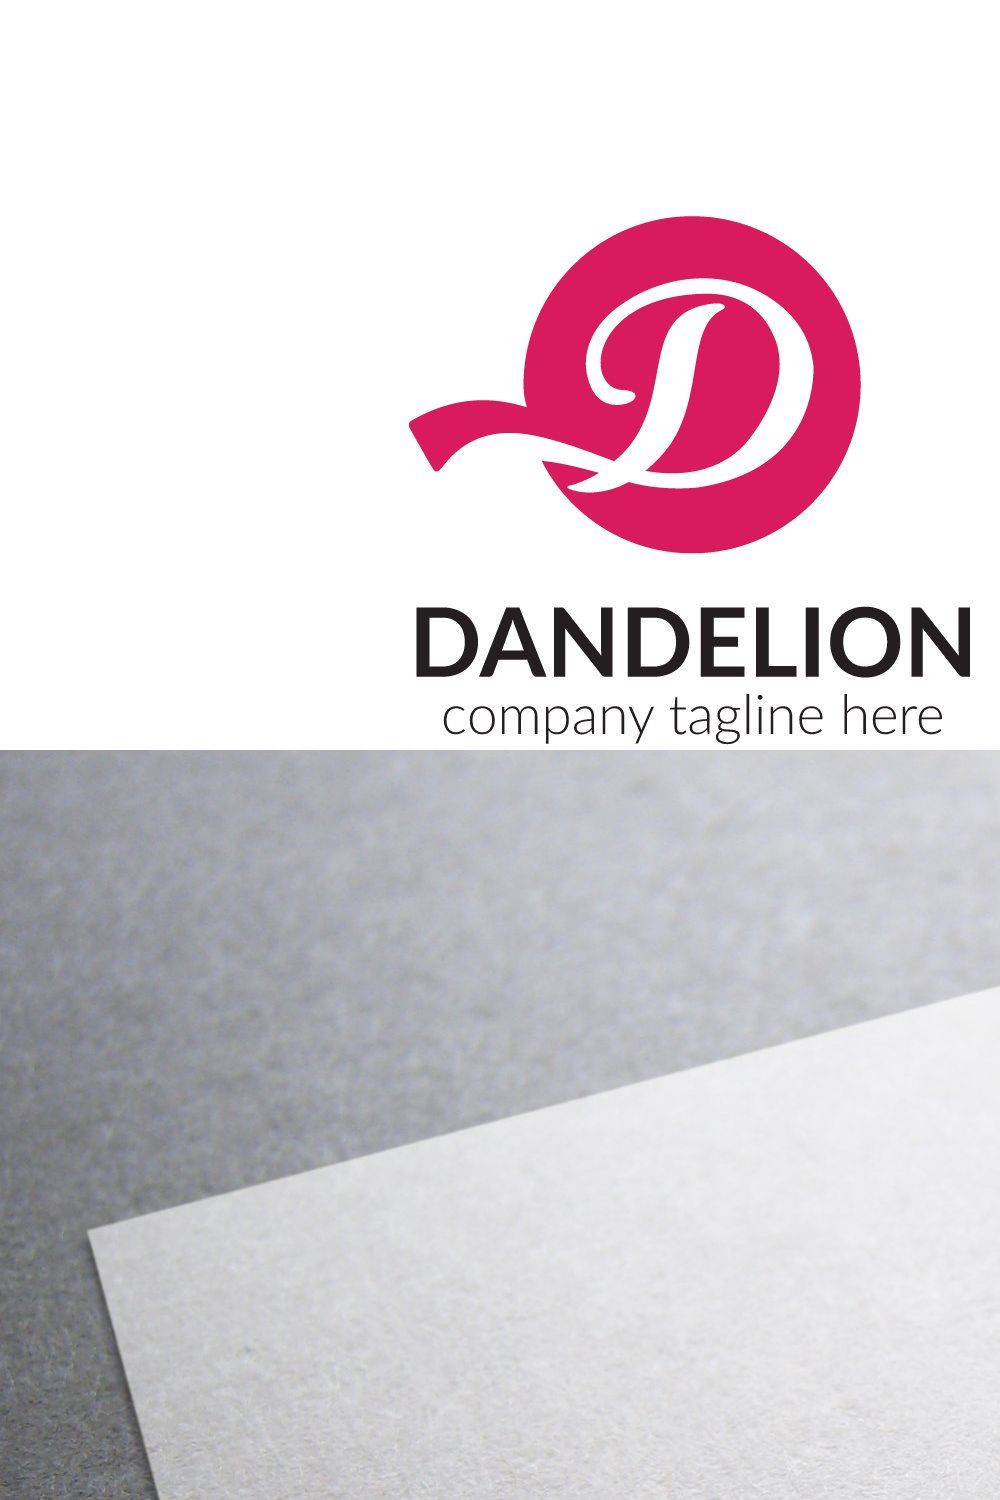 Dandelion Letter D Logo pinterest preview image.